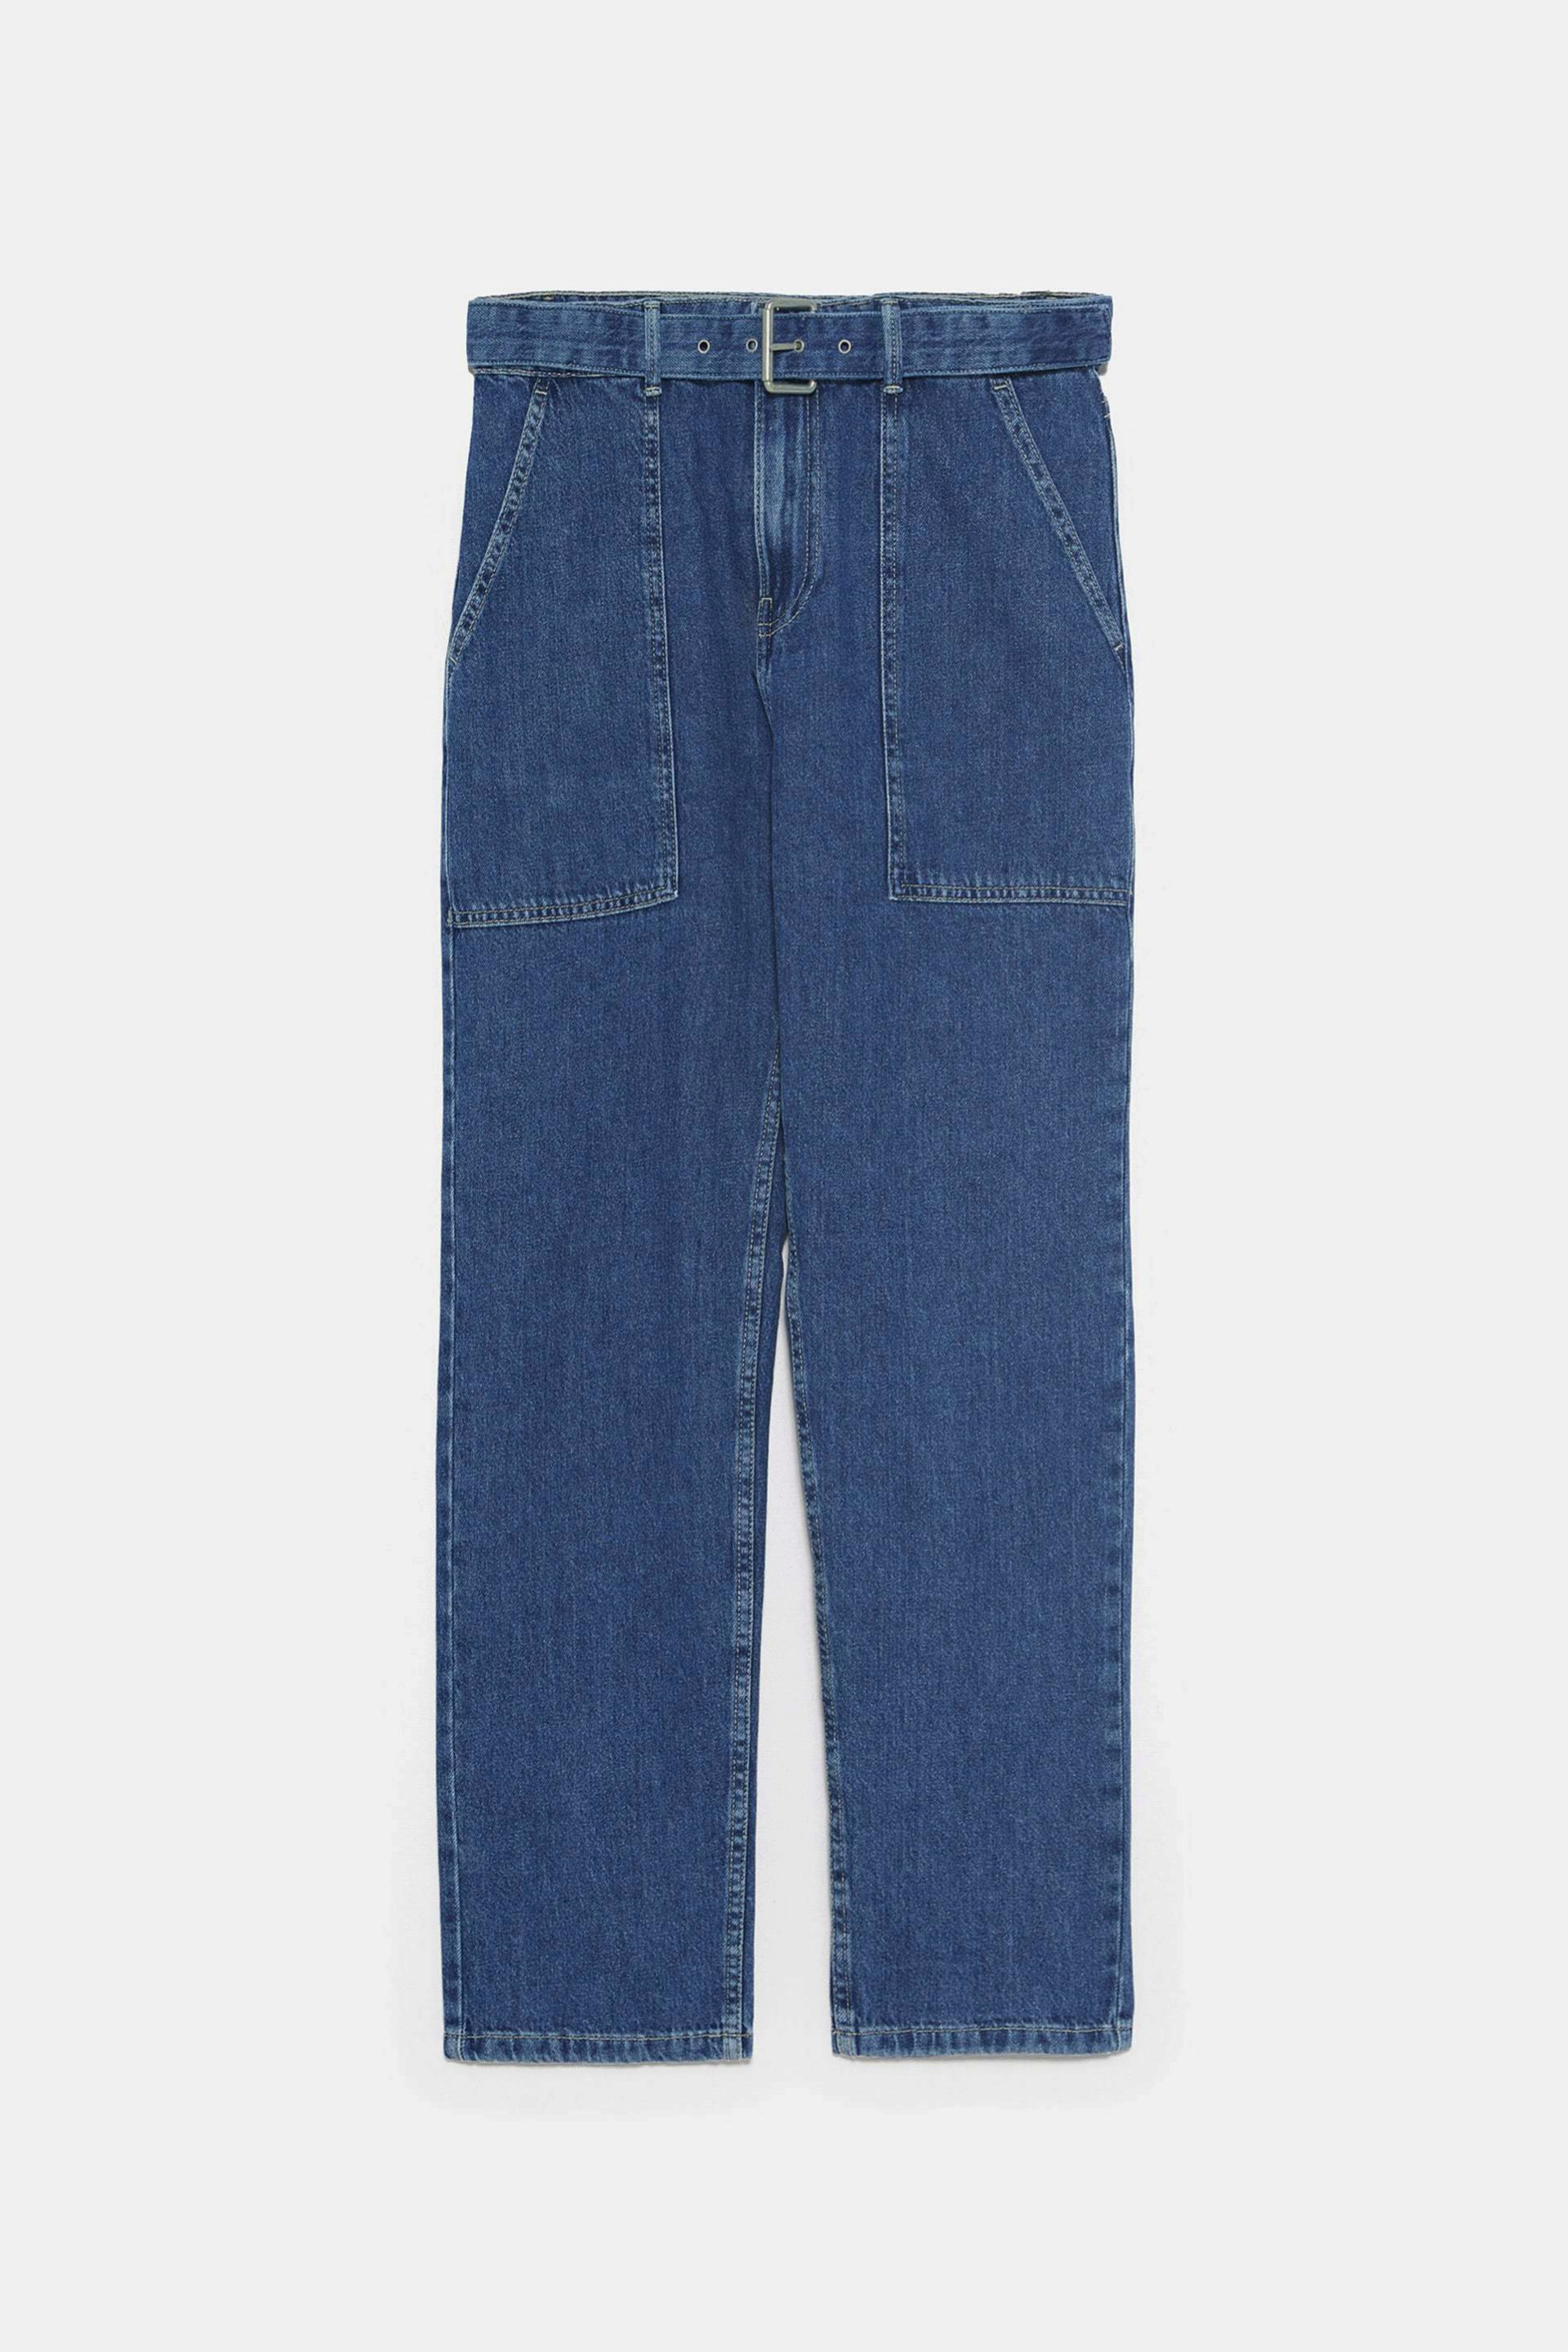 Jeans tipo baggy con cinturn de Zara (25,95)